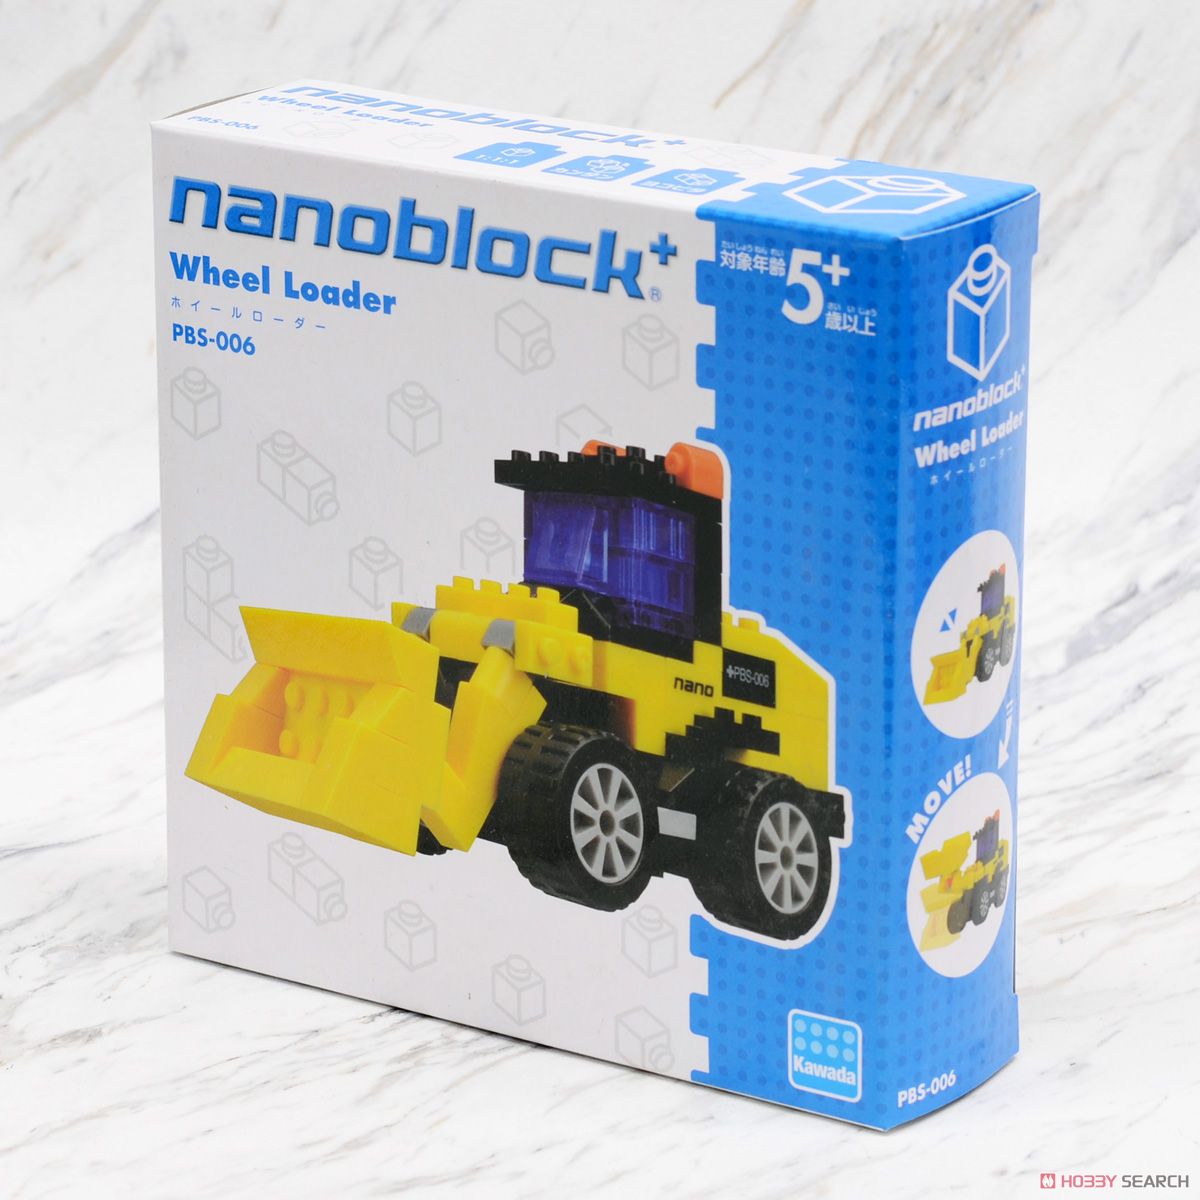 nanoblock+ ホイールローダー (ブロック) パッケージ1